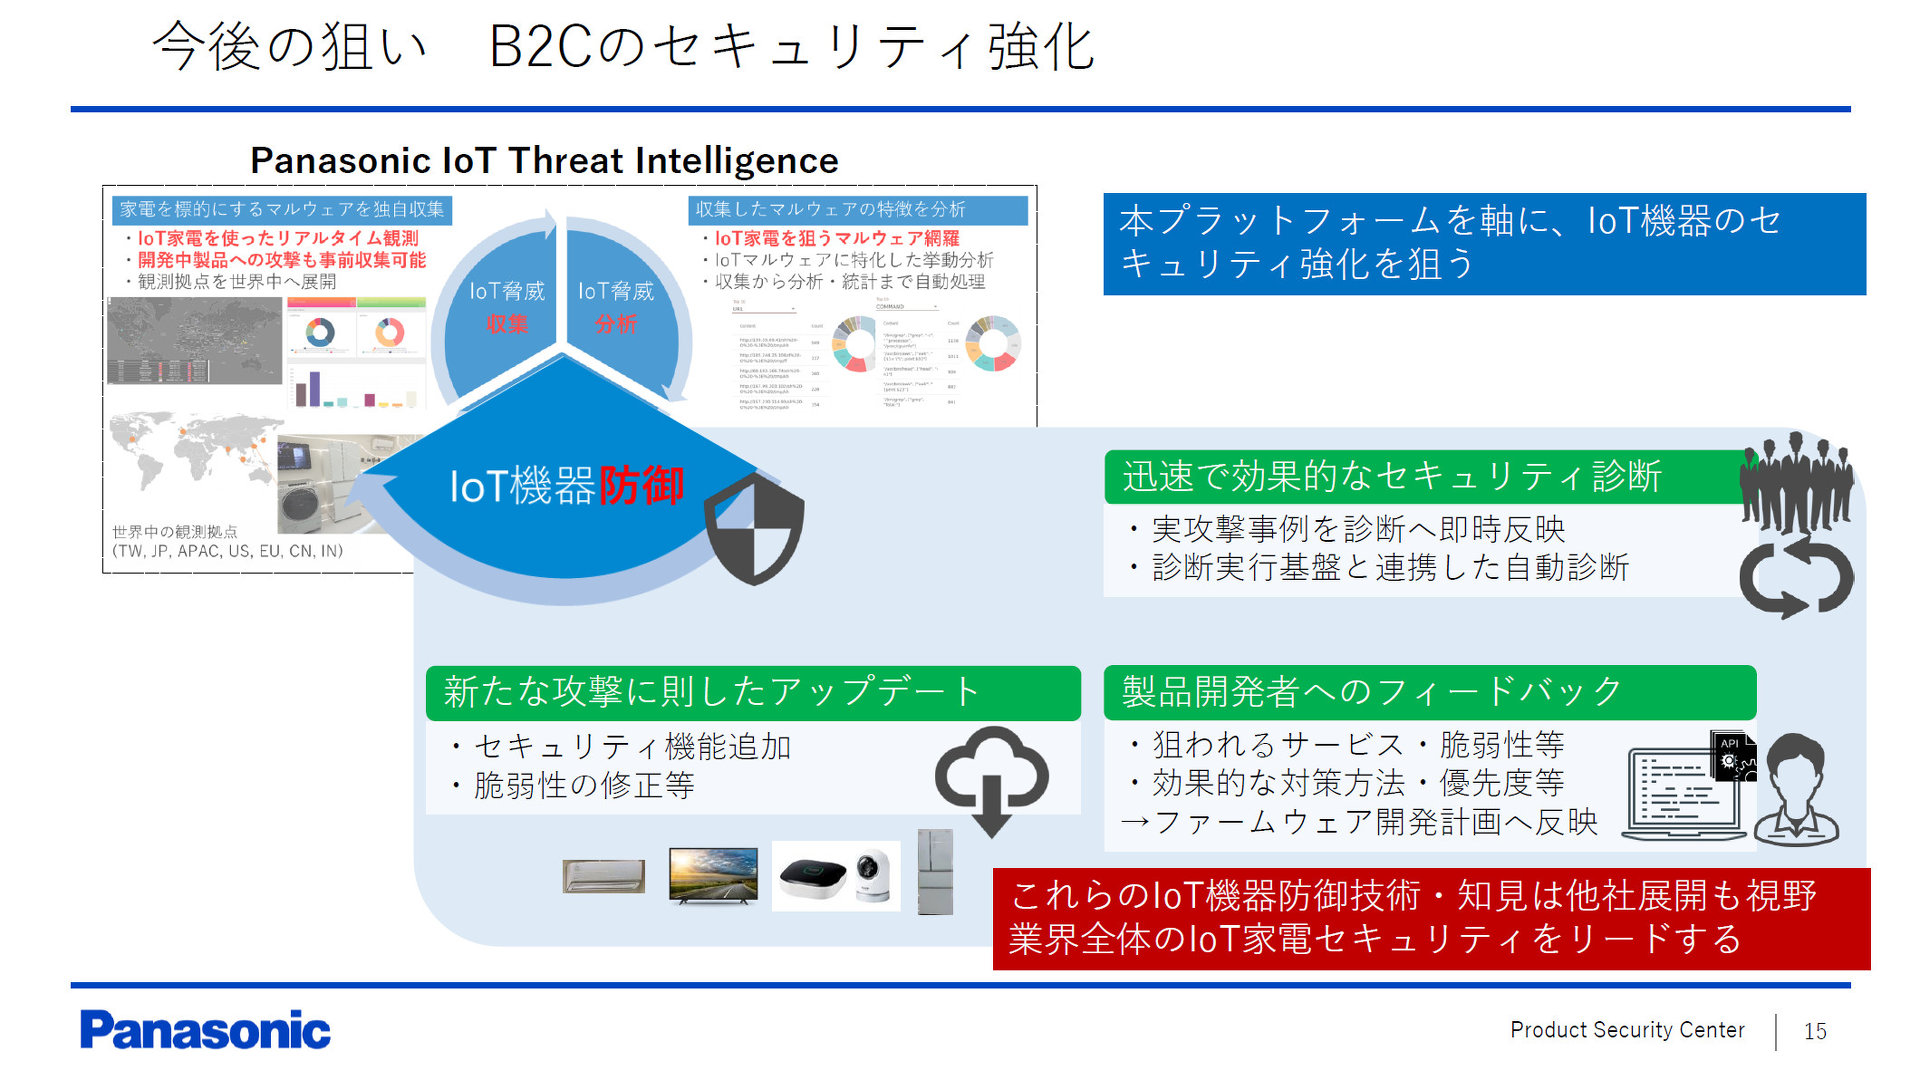  Panasonic IoT Threat Intelligence vbgtH[̍̑_iNbNŊgj oTFpi\jbN